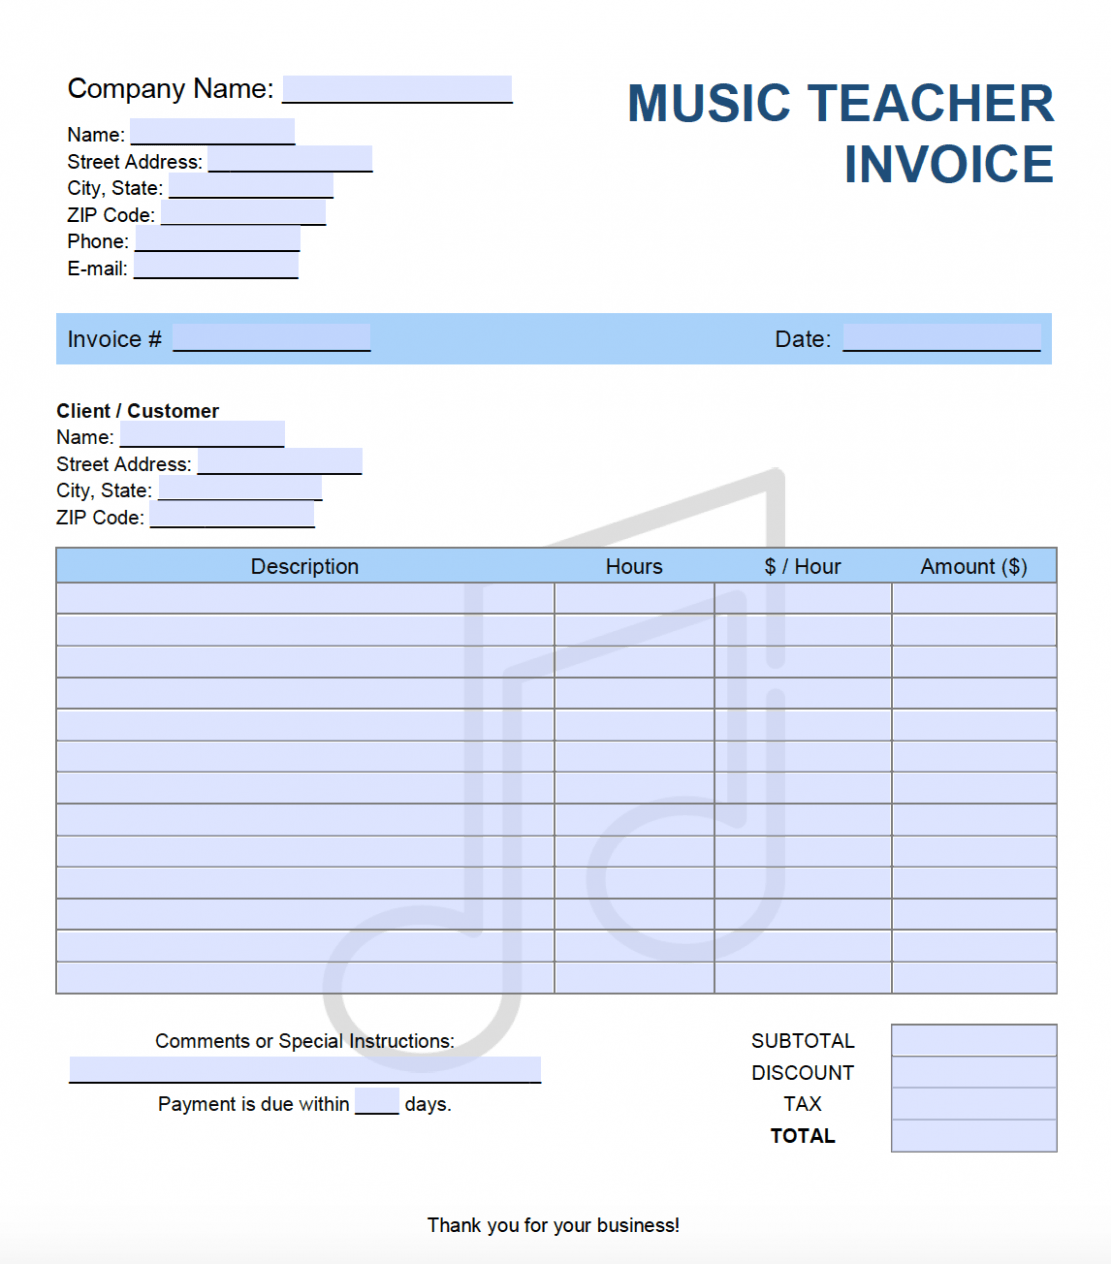 Sample Music Teacher Invoice Template Excel